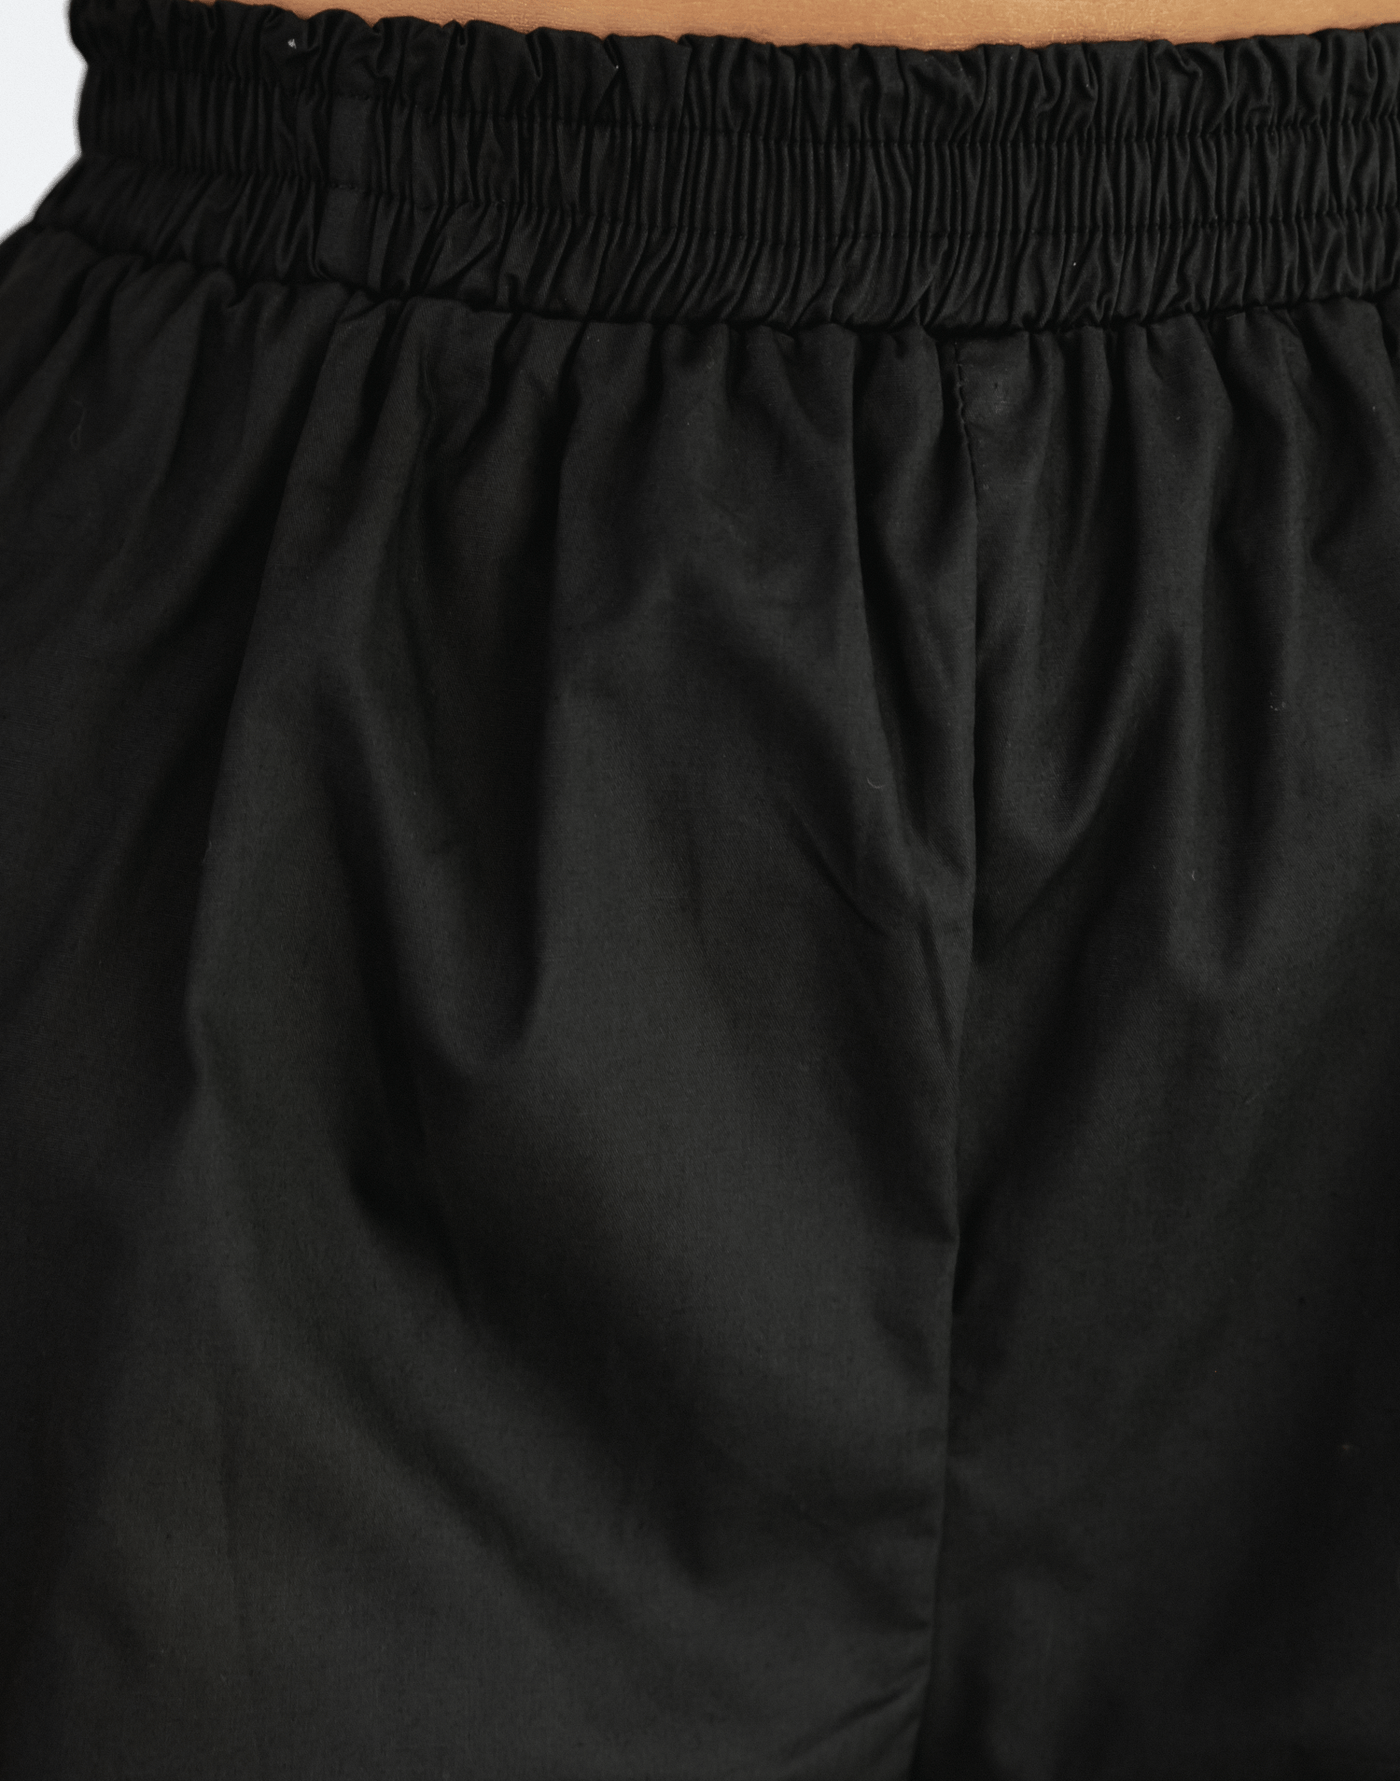 South Beach Shorts (Black) - High Waisted Cotton Shorts - Women's Shorts - Charcoal Clothing